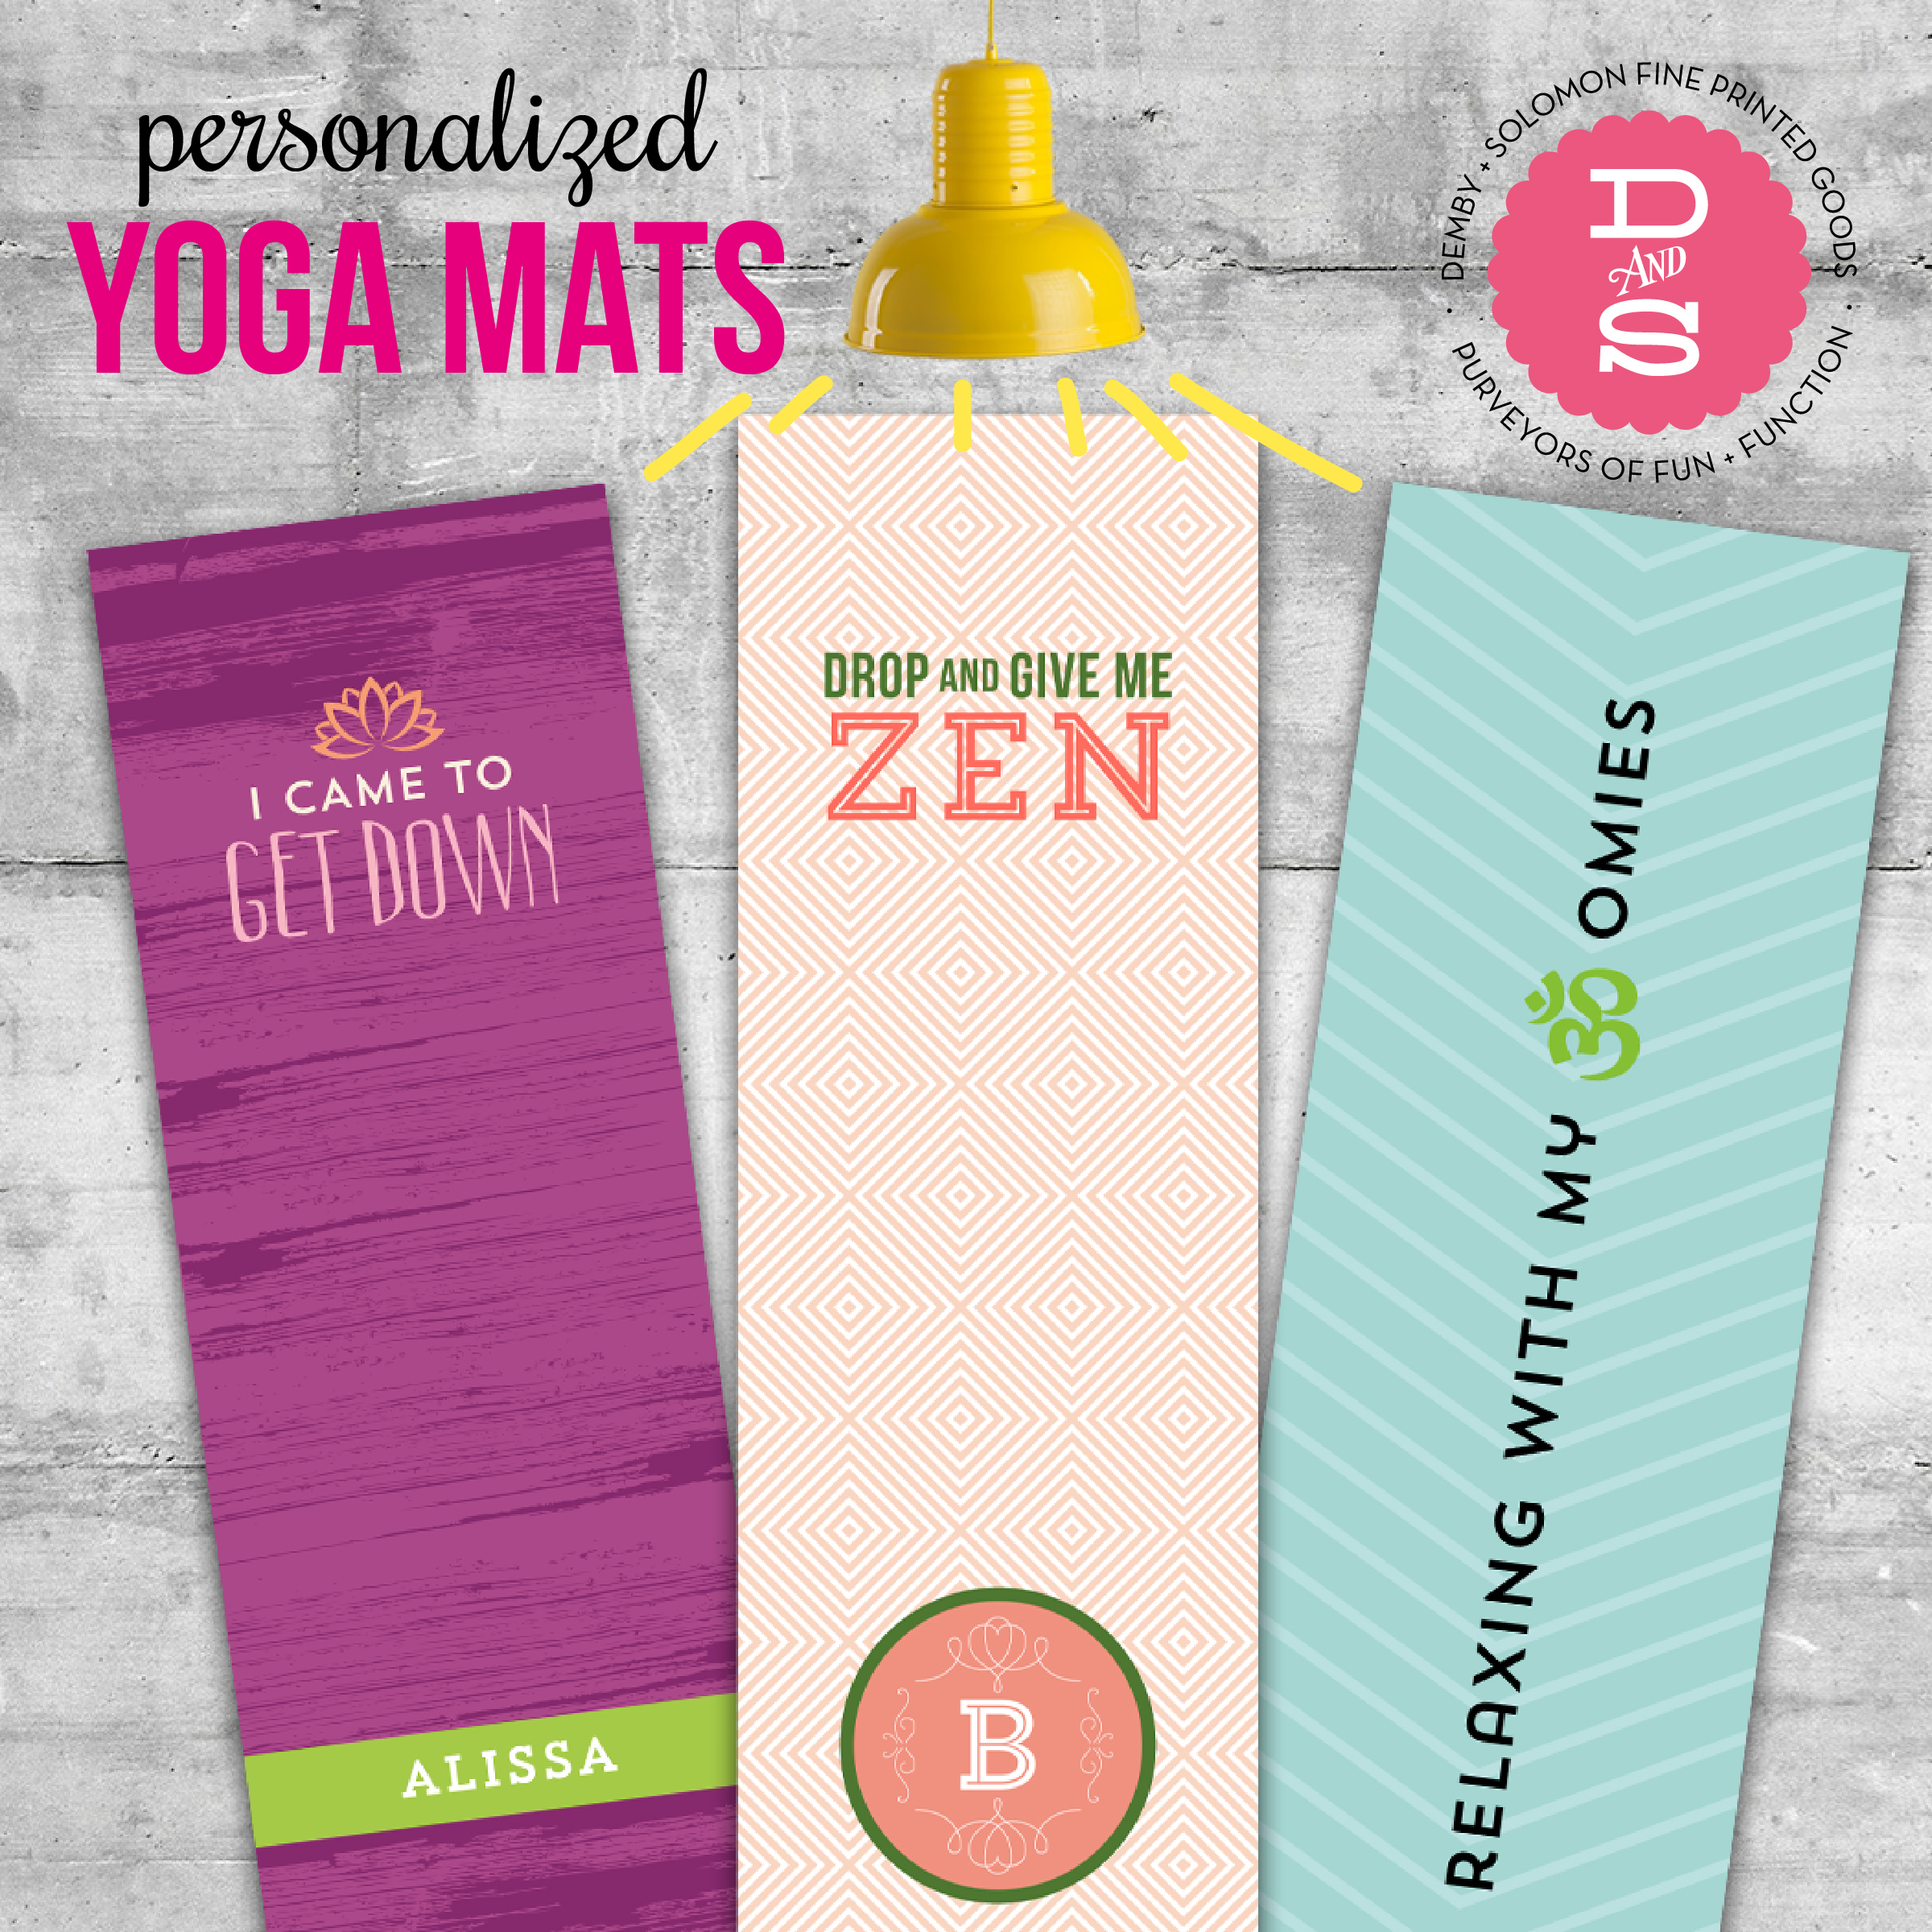 Yoga Mat design and social media promotion